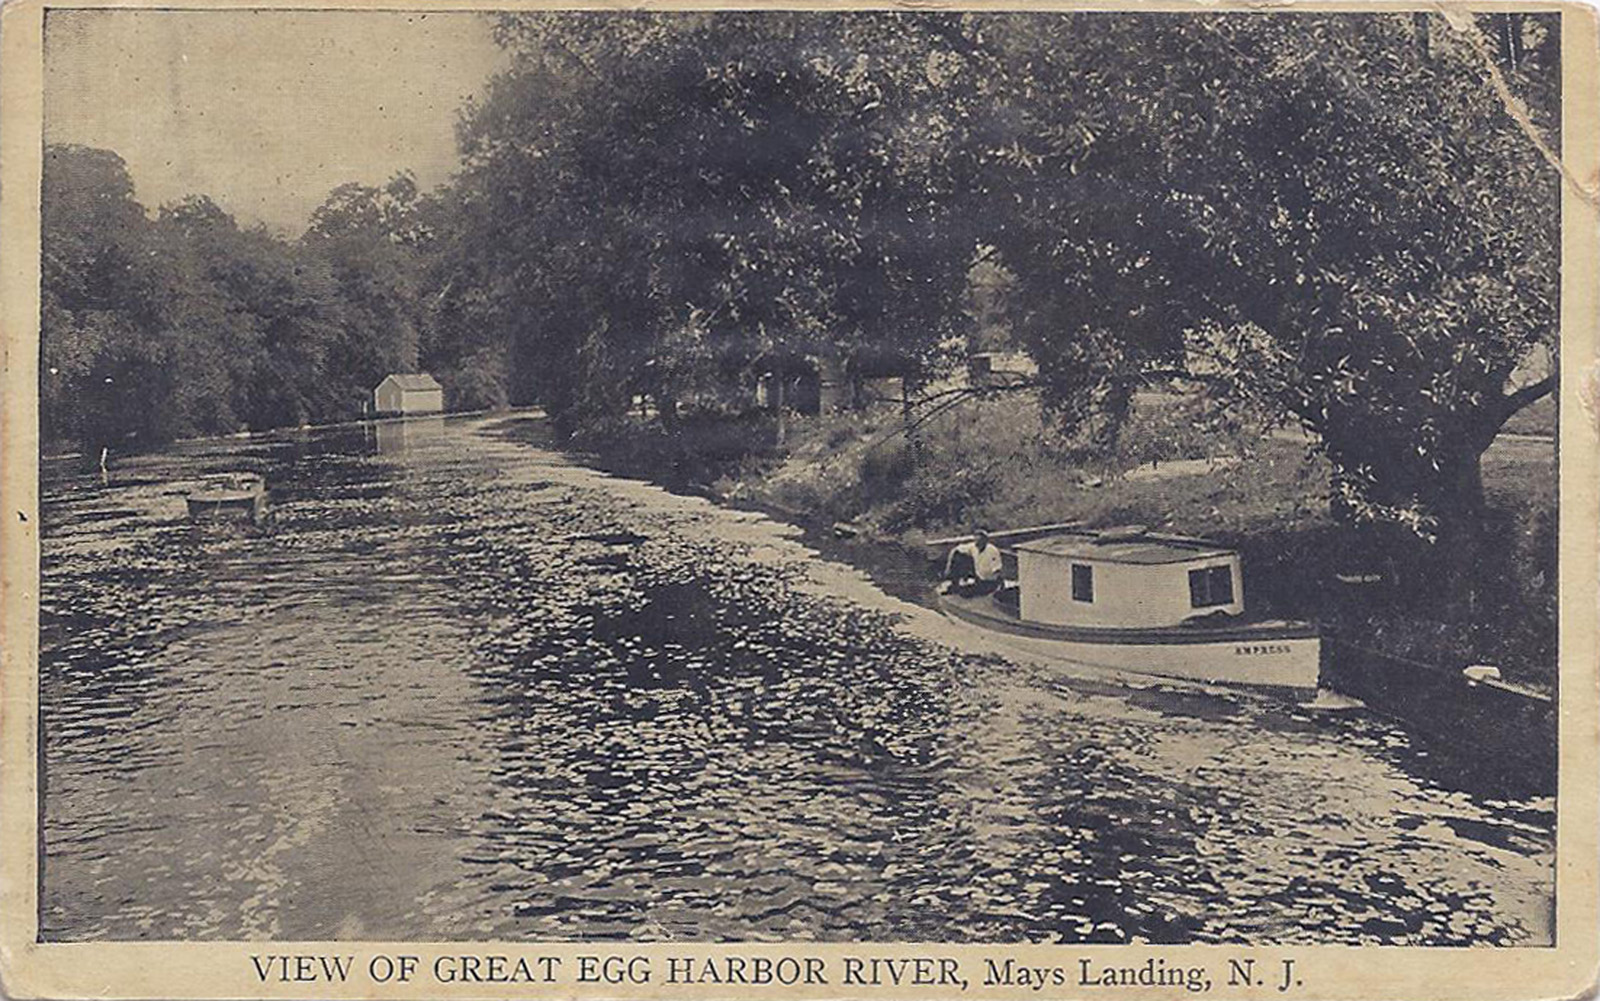 Mays Landing - Great Egg Harbor River view - 1923